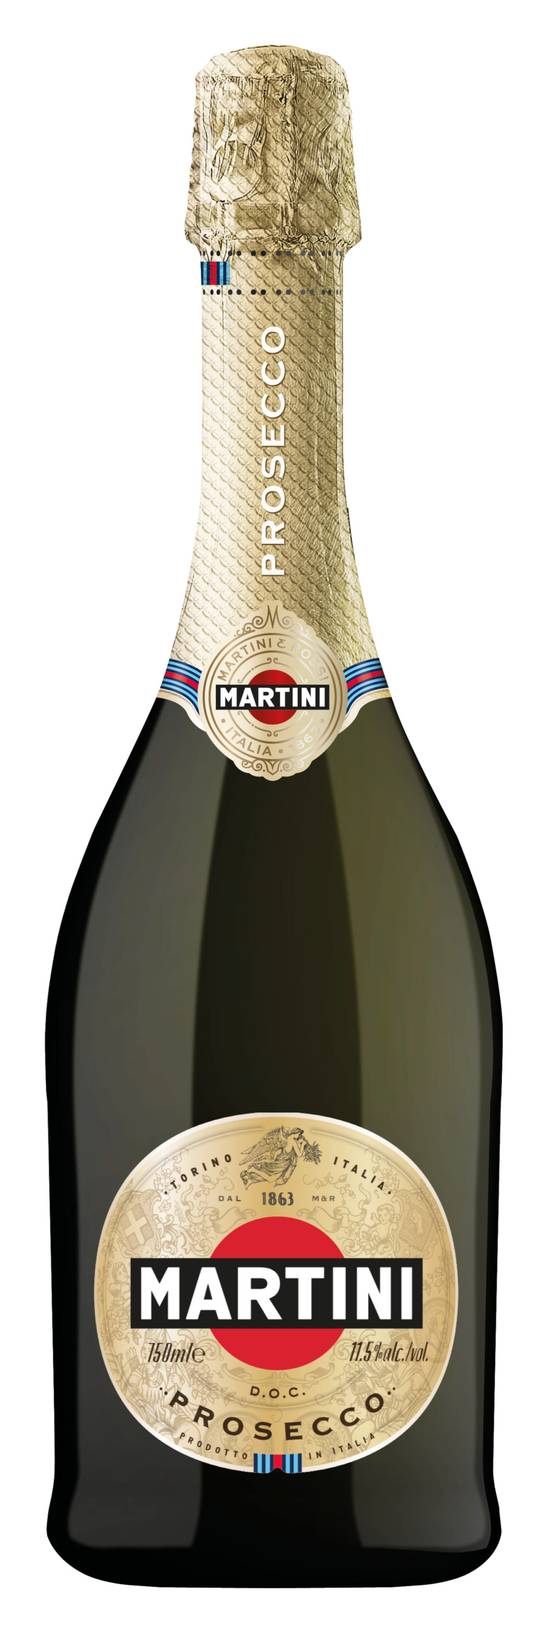 Martini - Vin blanc pétillant prosecco (750 ml)